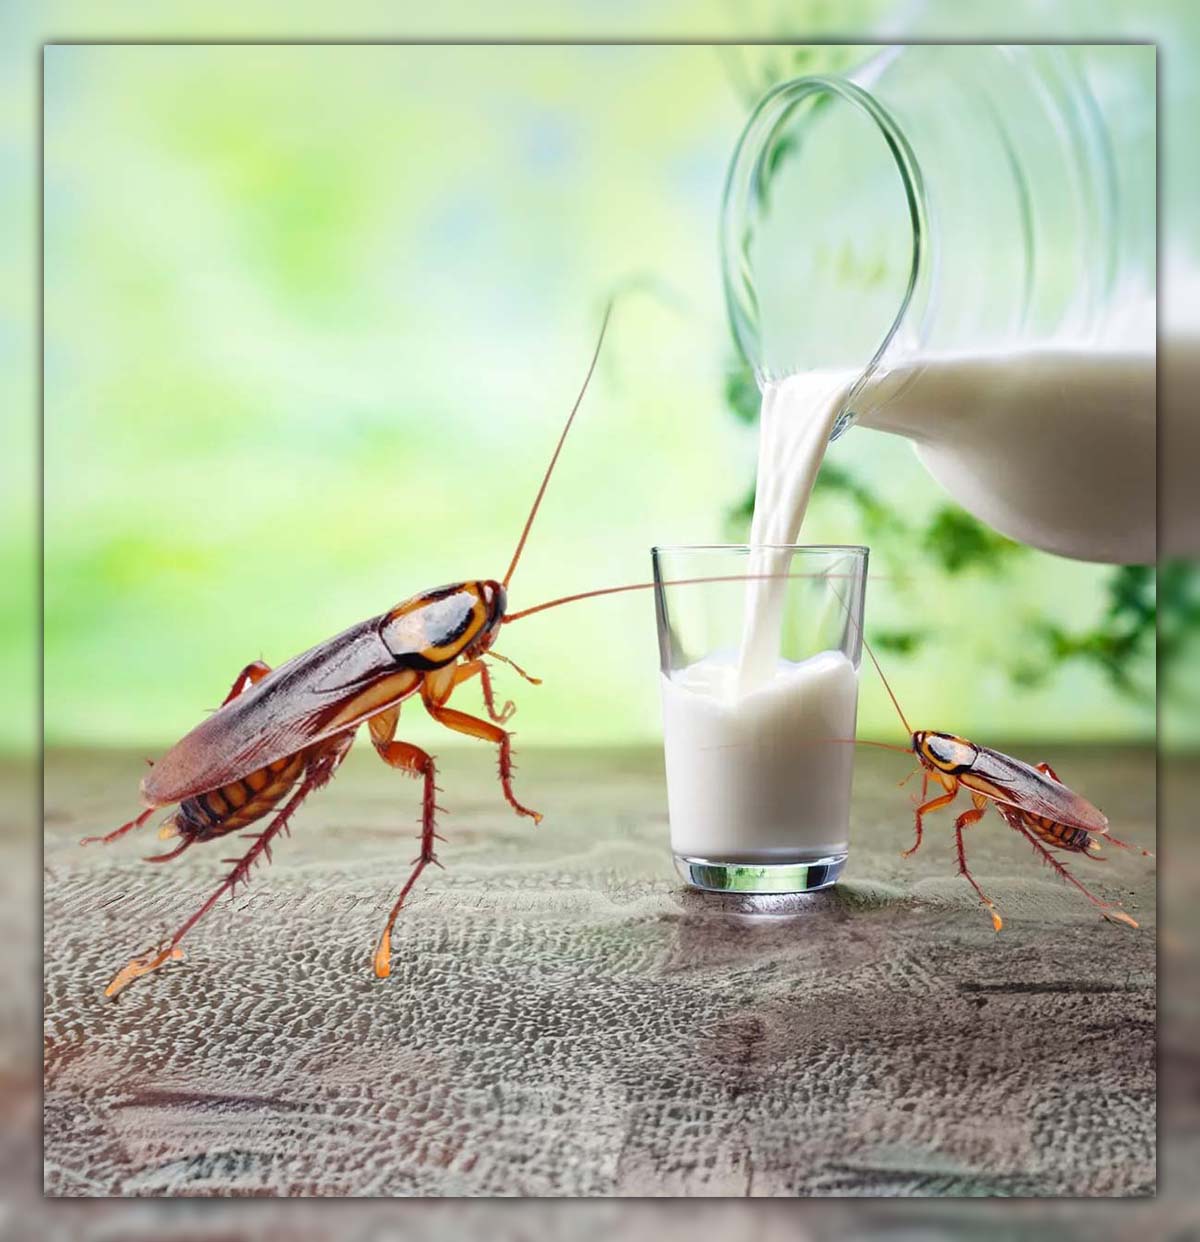 Cockroach Milk 